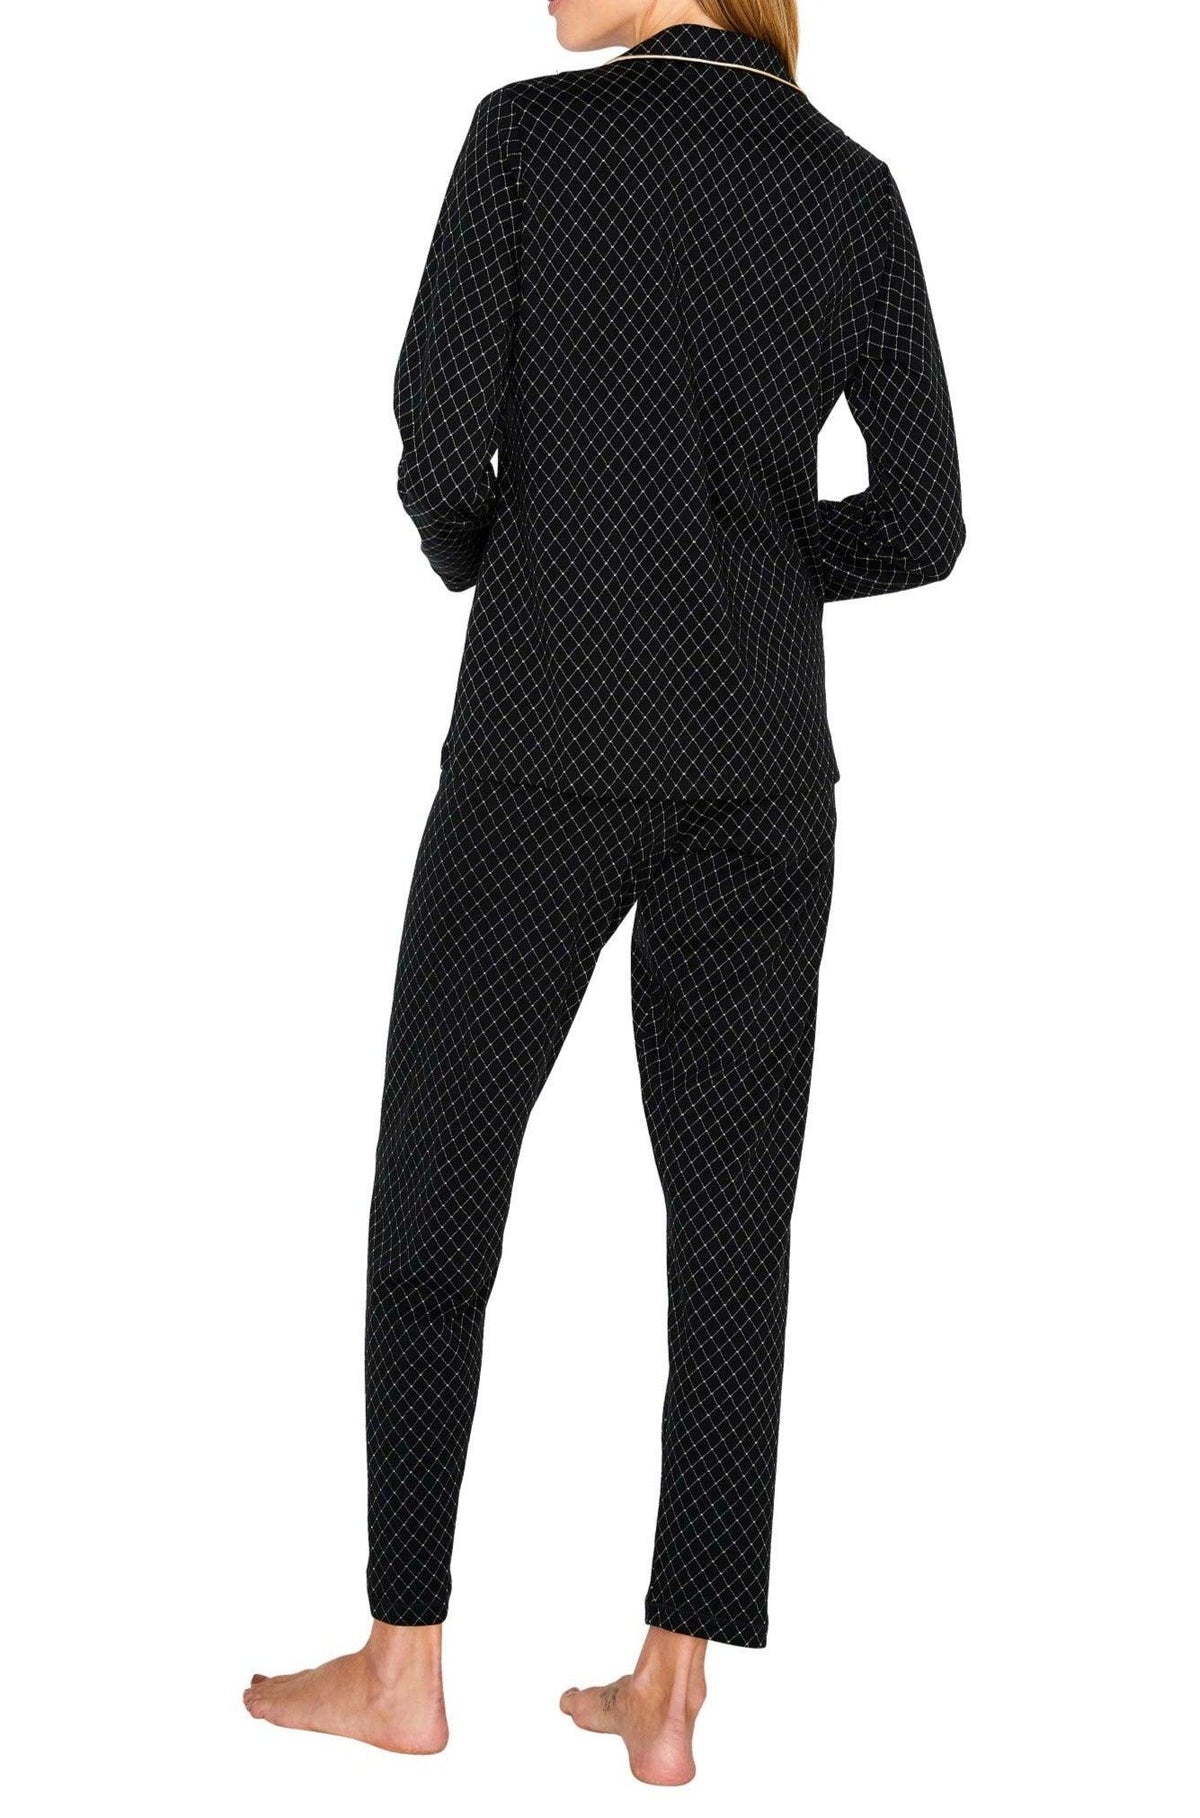 Audrey Long Sleeve PJ Set - Marelle Sleepwear